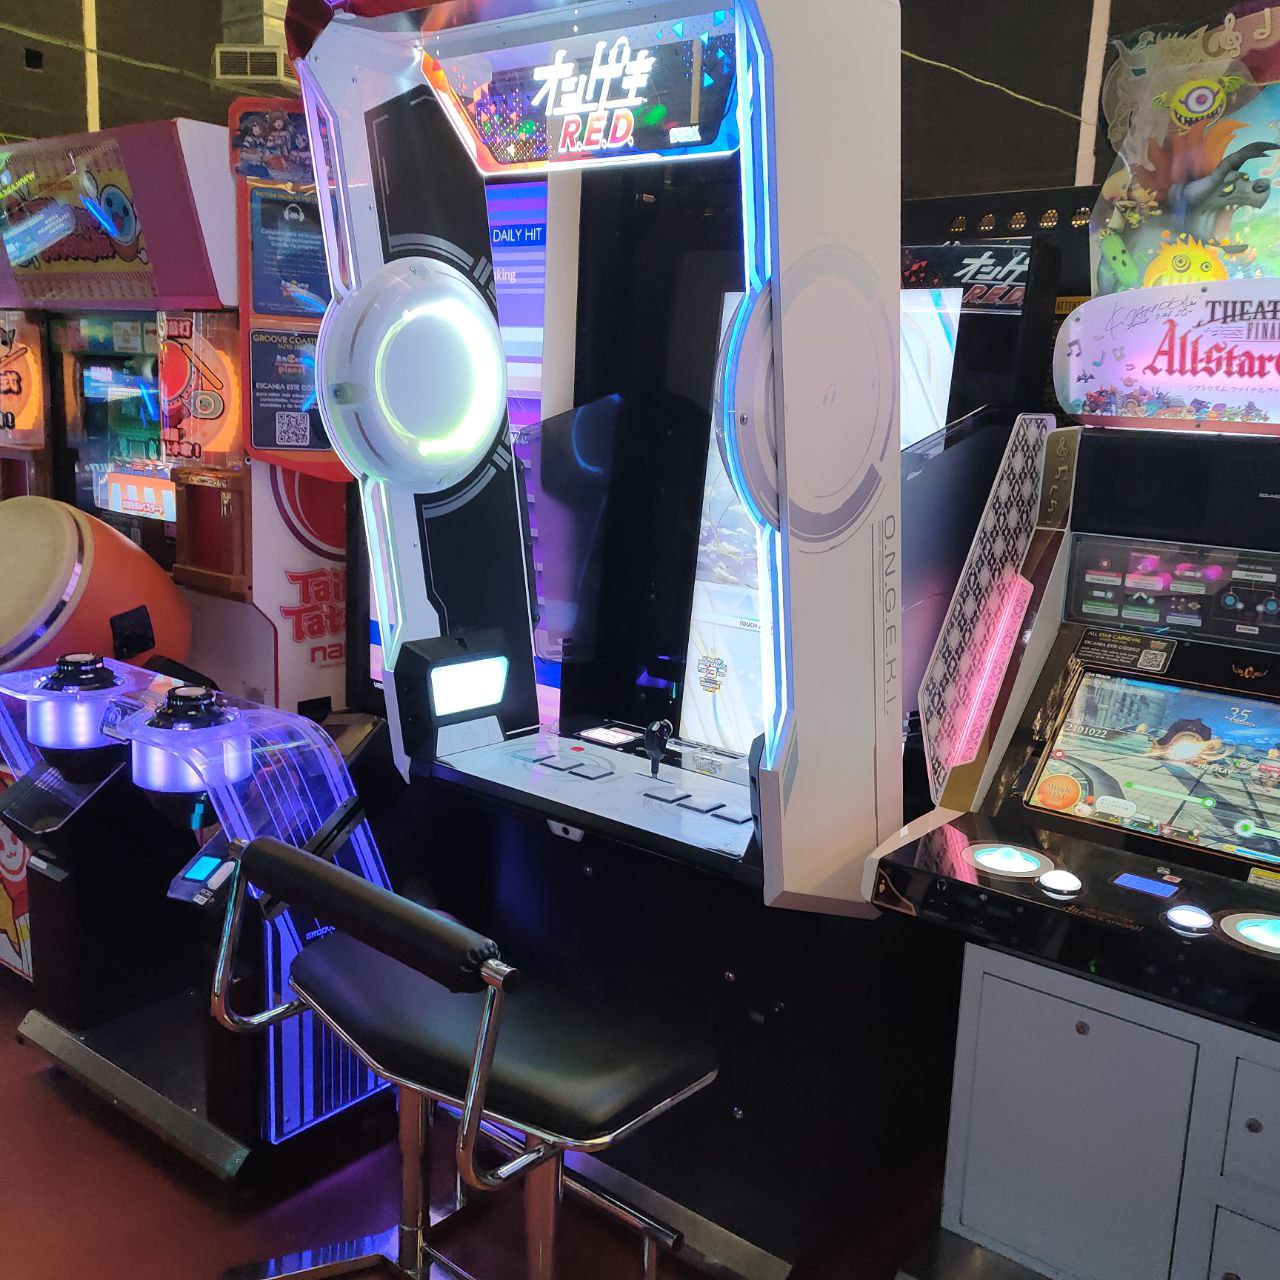 O.N.G.E.K.I R.E.D machine - Arcade Locations - Picture Gallery - ZIv